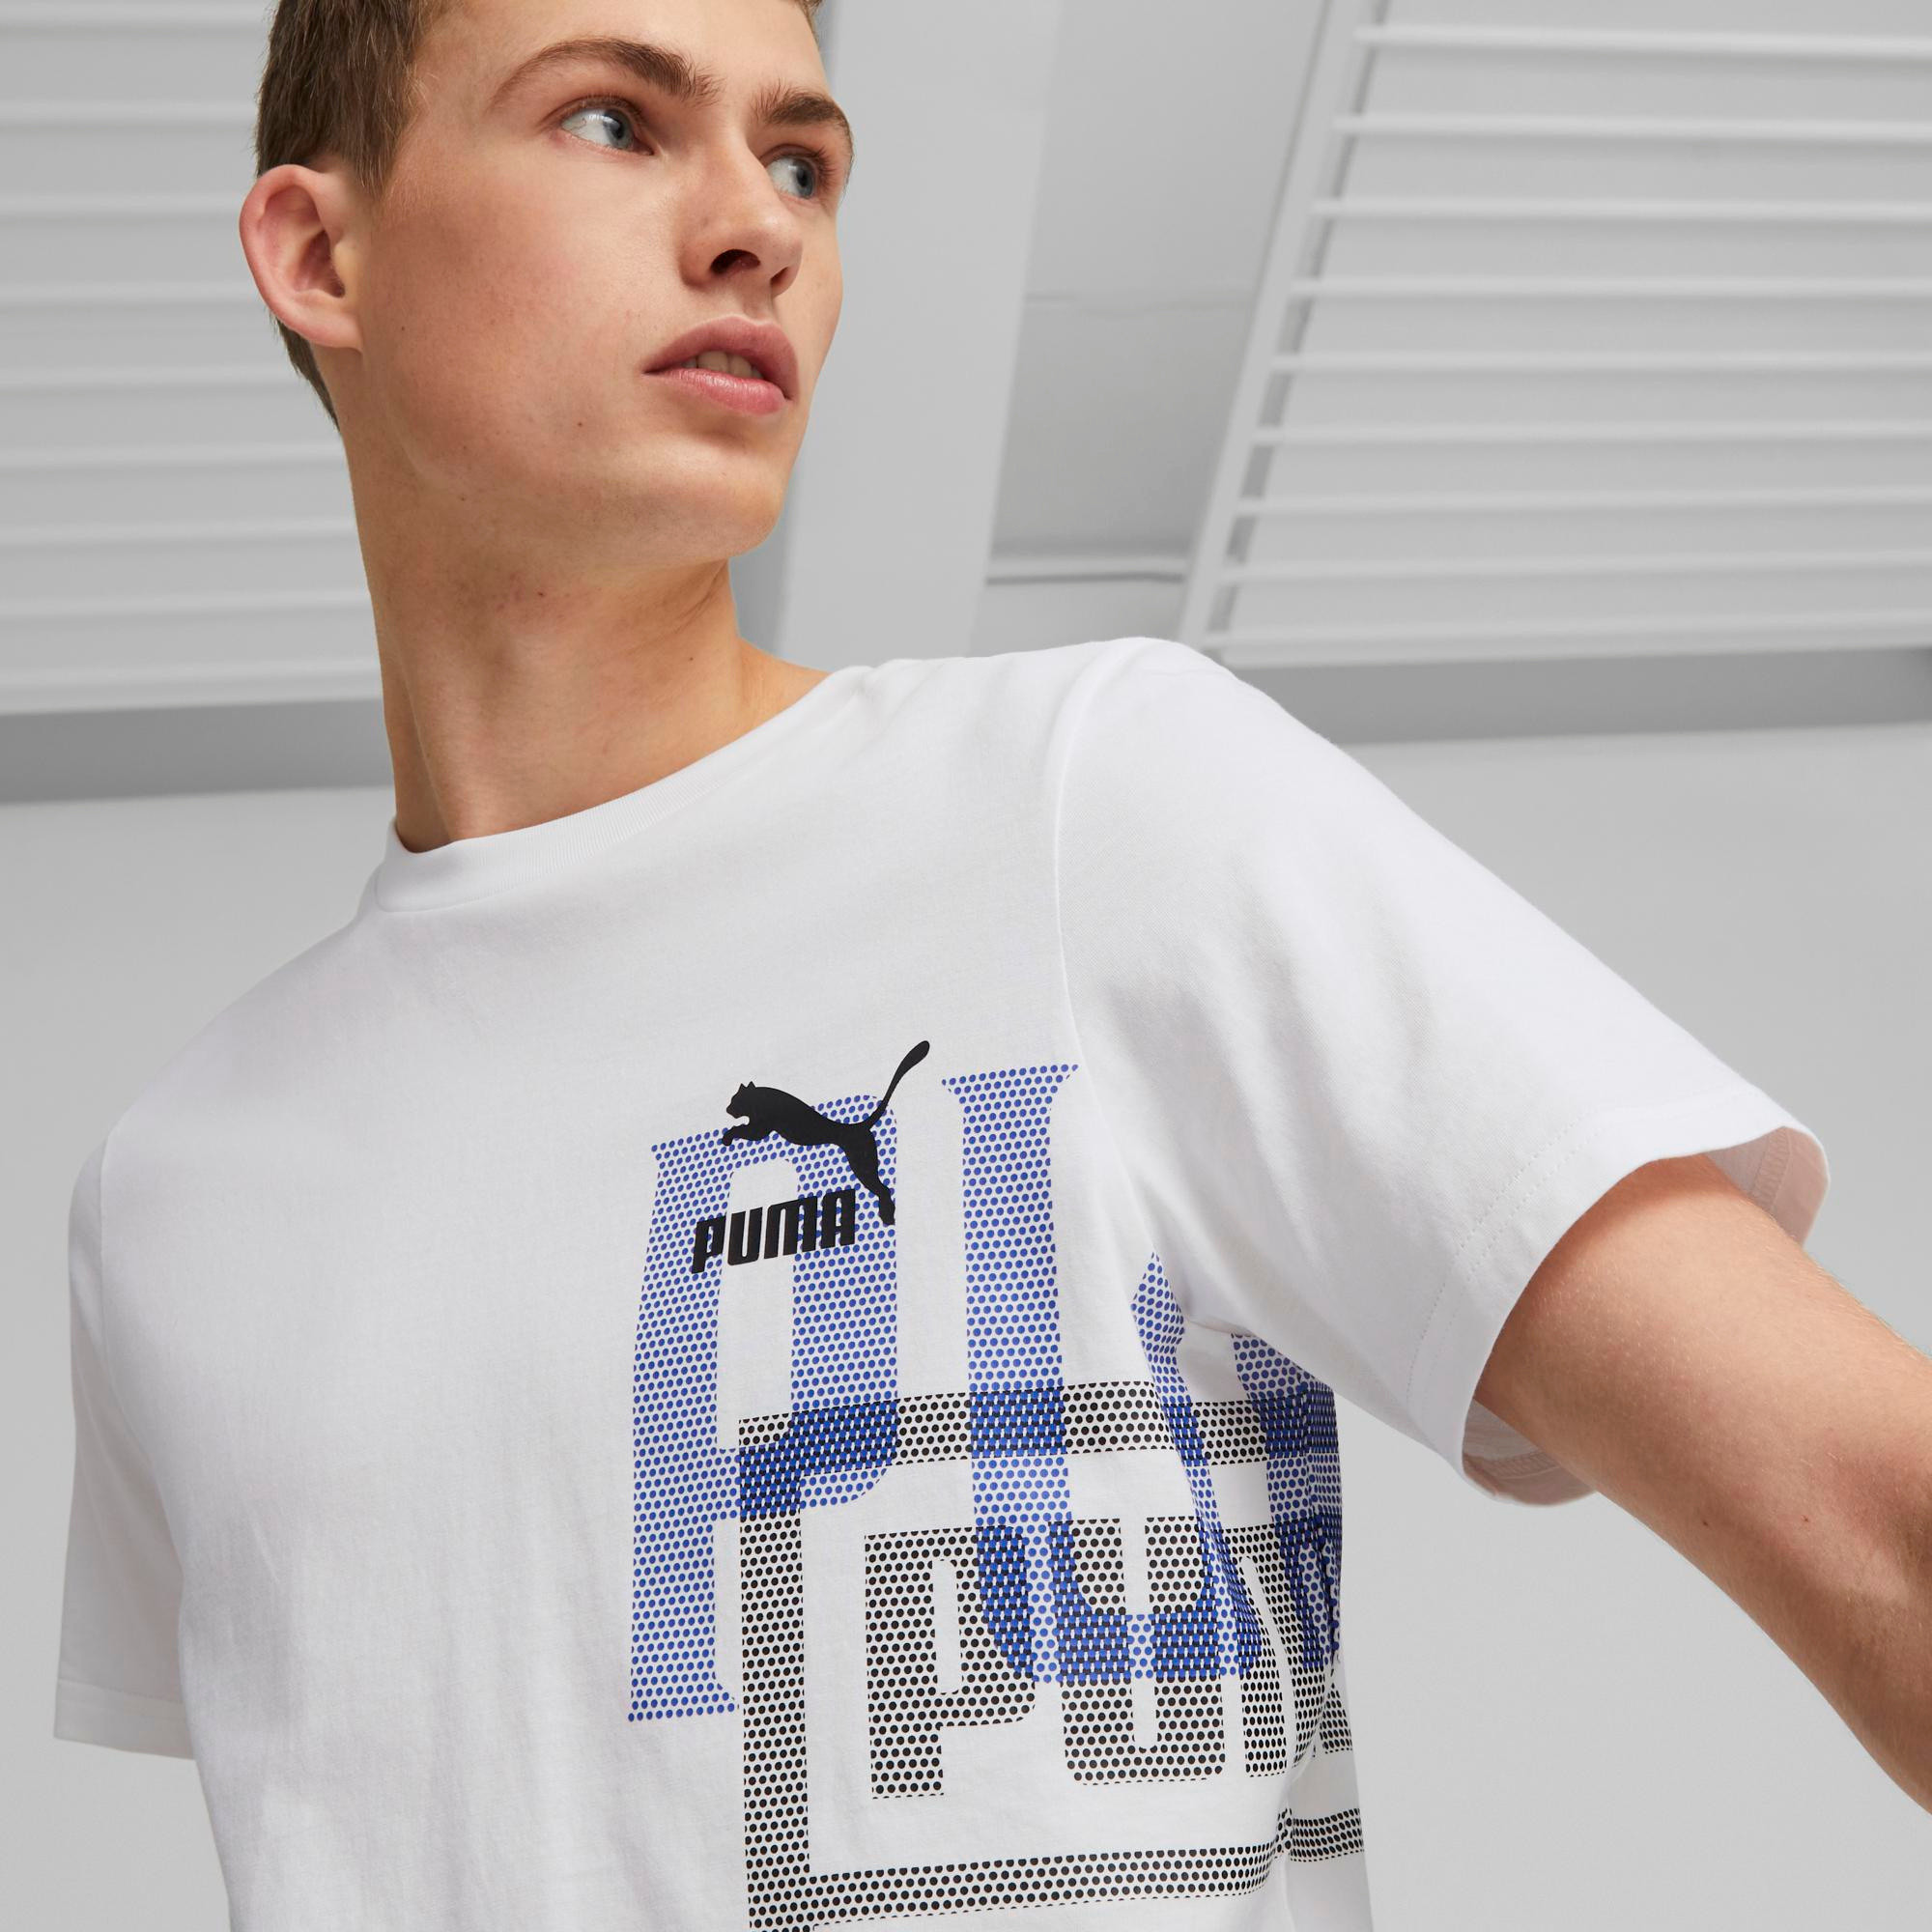 Puma - Cotton T-shirt with logo, White, large image number 5